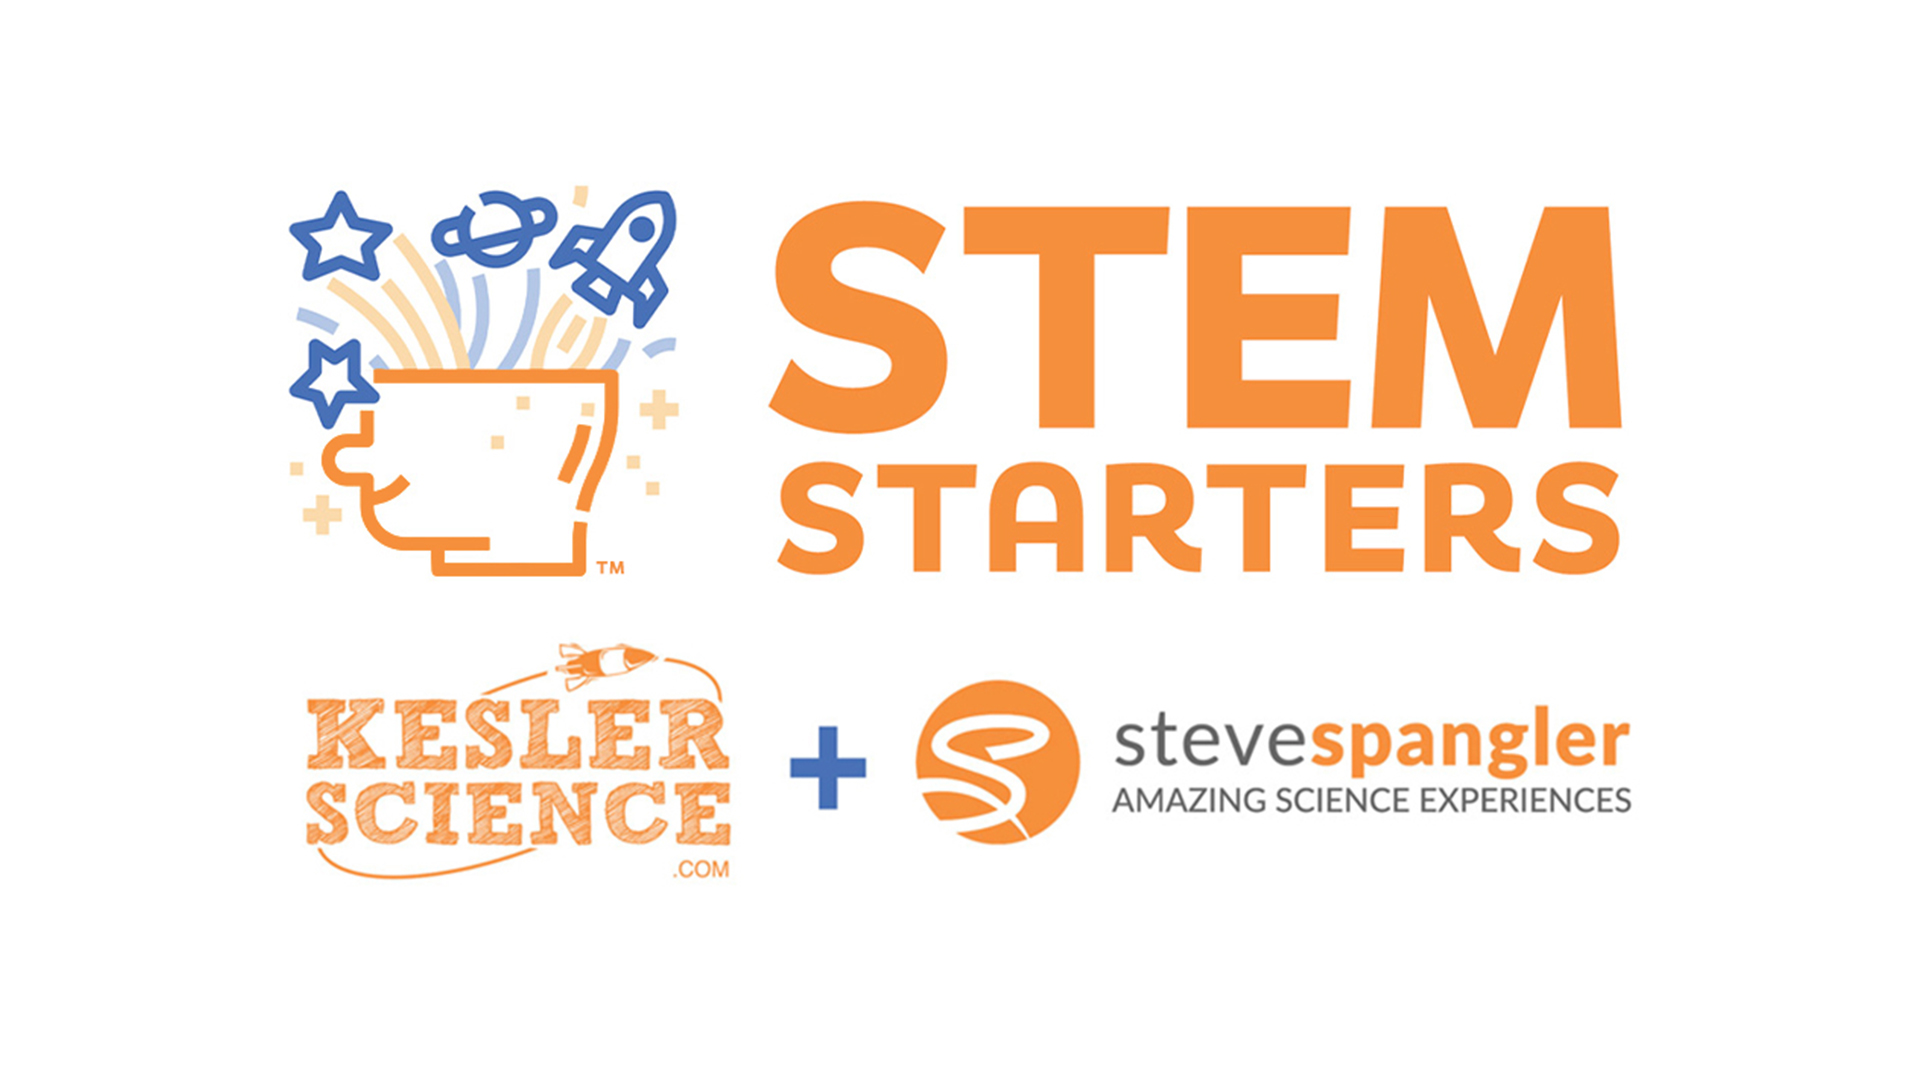 STEM Starters Steve Spangler and Kesler Science